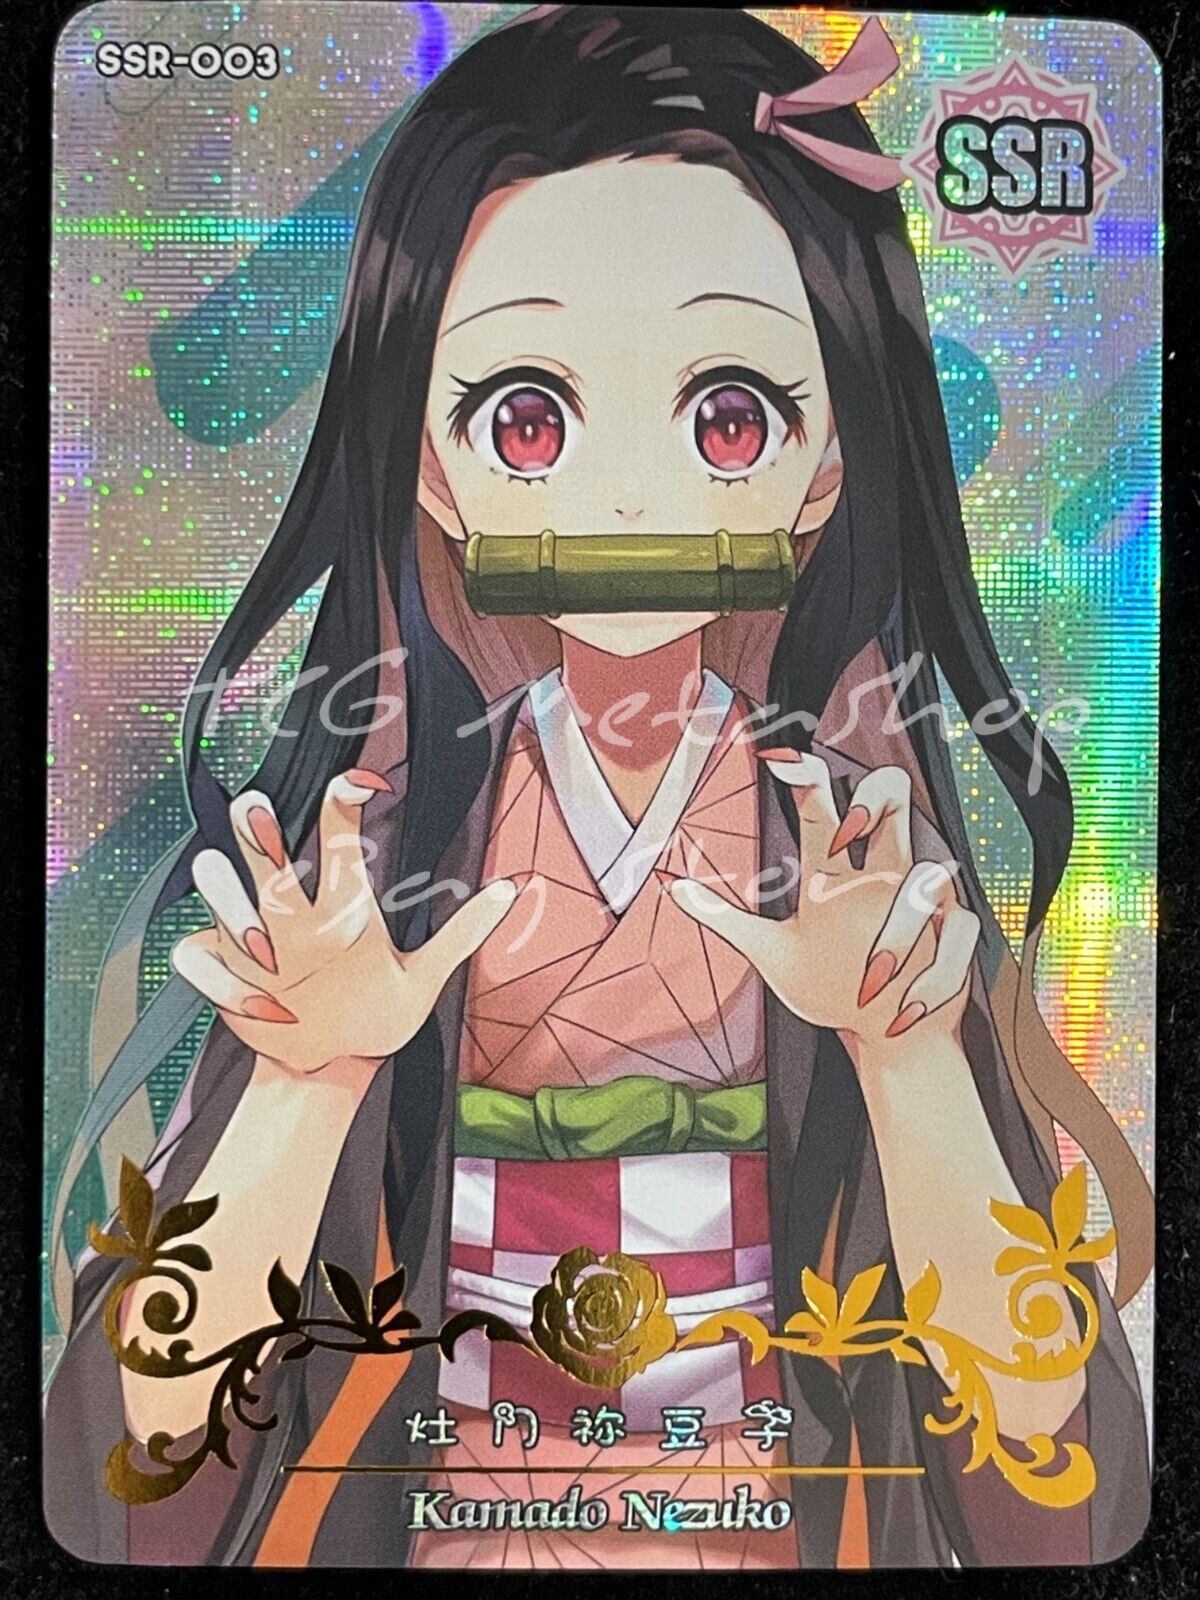 🔥 ACG [Pick your Custom SSR card] Goddess Story Anime Waifu Doujin 🔥